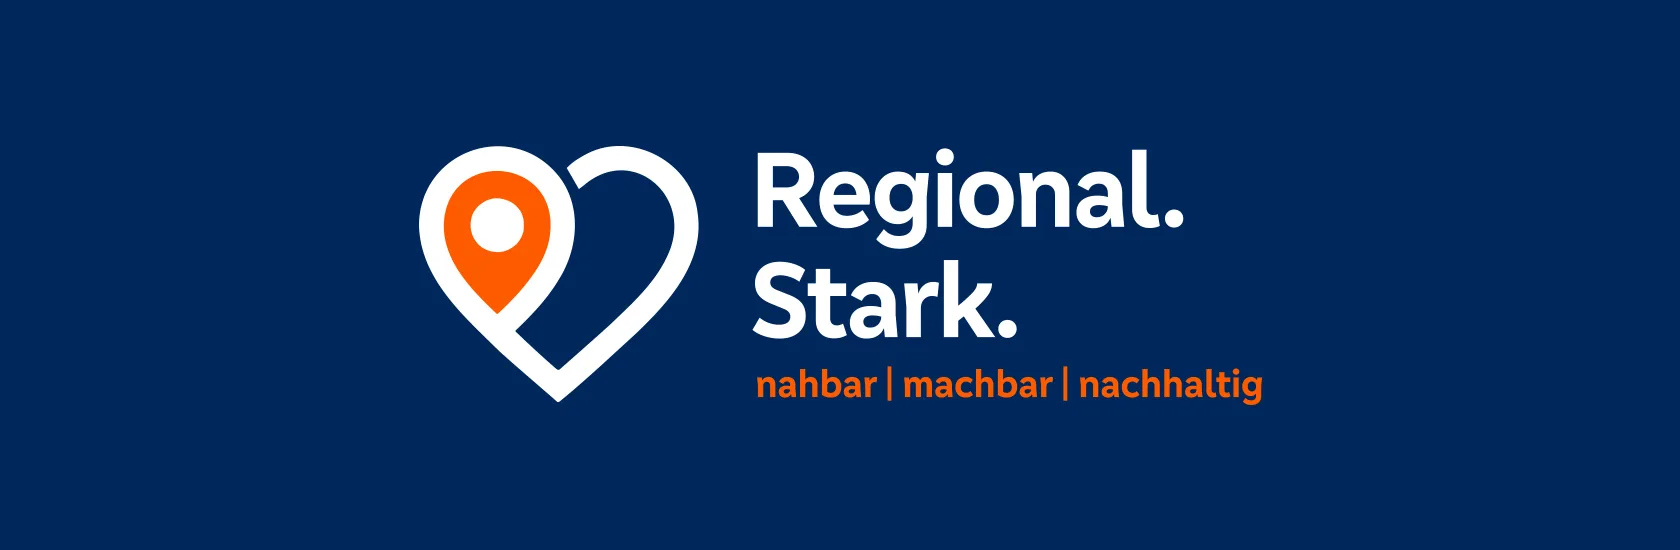 Regional Stark.